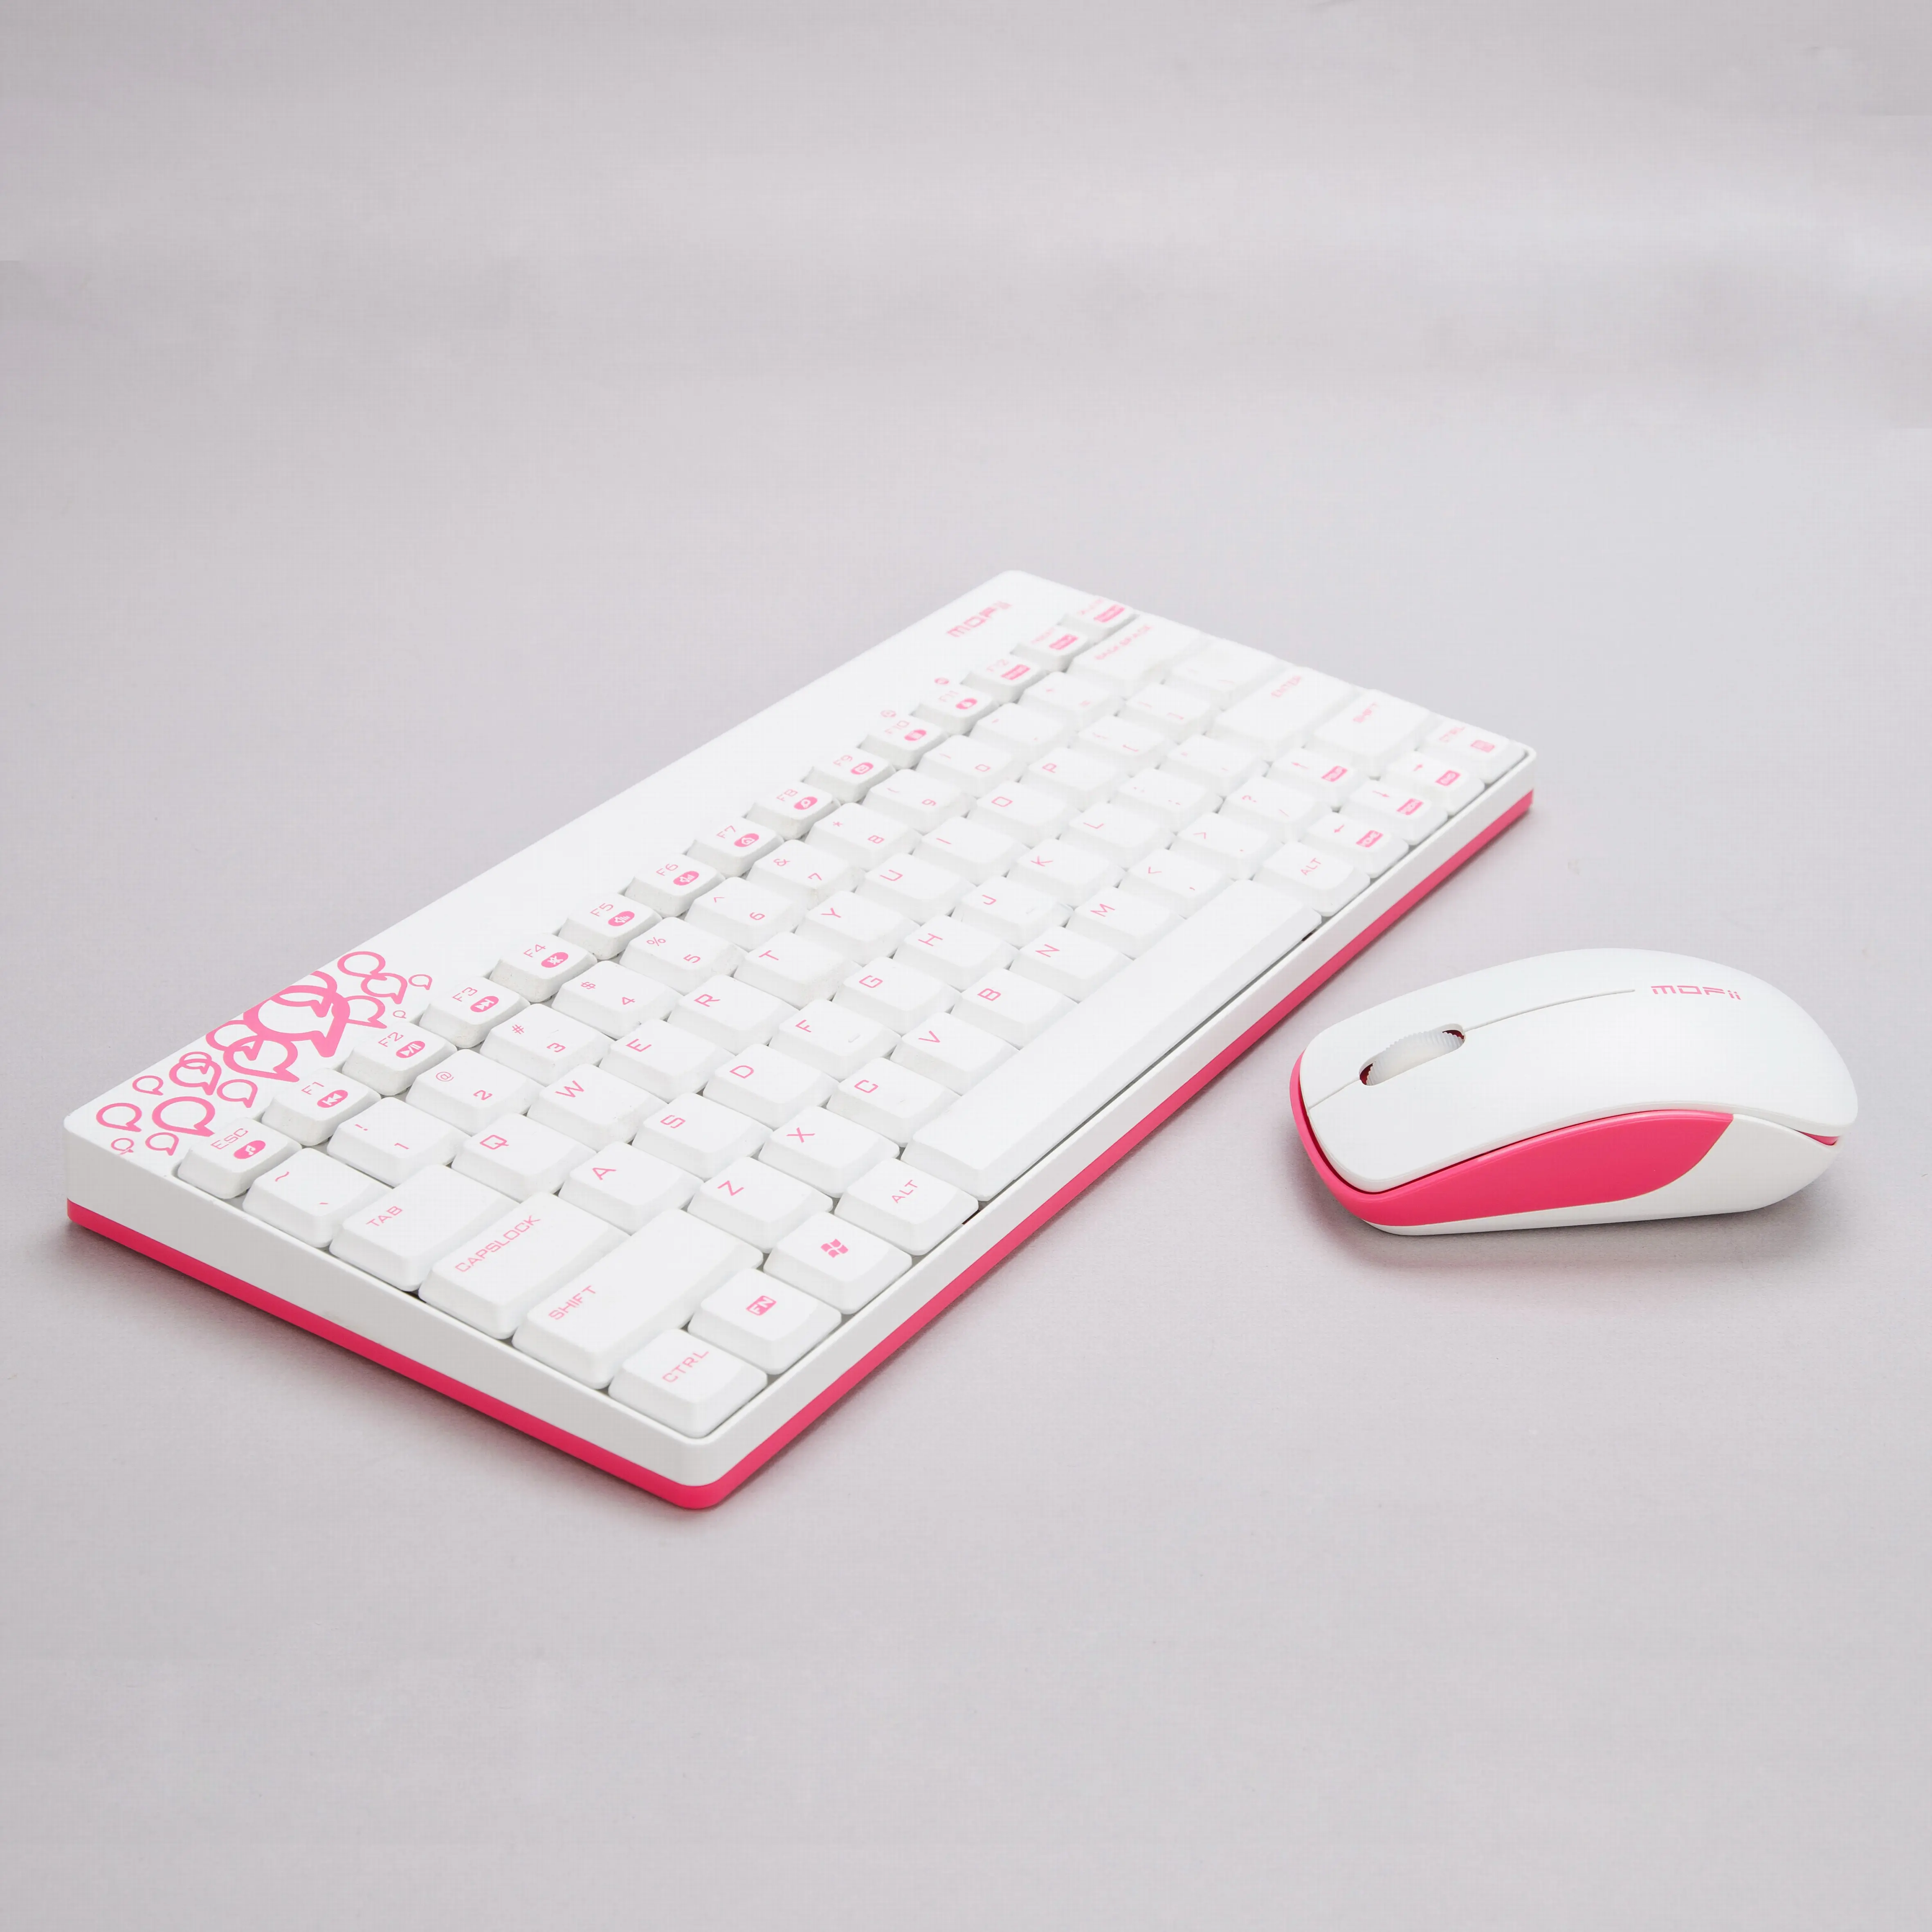 Keyboard dan mouse nirkabel 2.4G, mouse optik 3D, keyboard ramping ukuran ringkas dengan tangan kiri/kanan